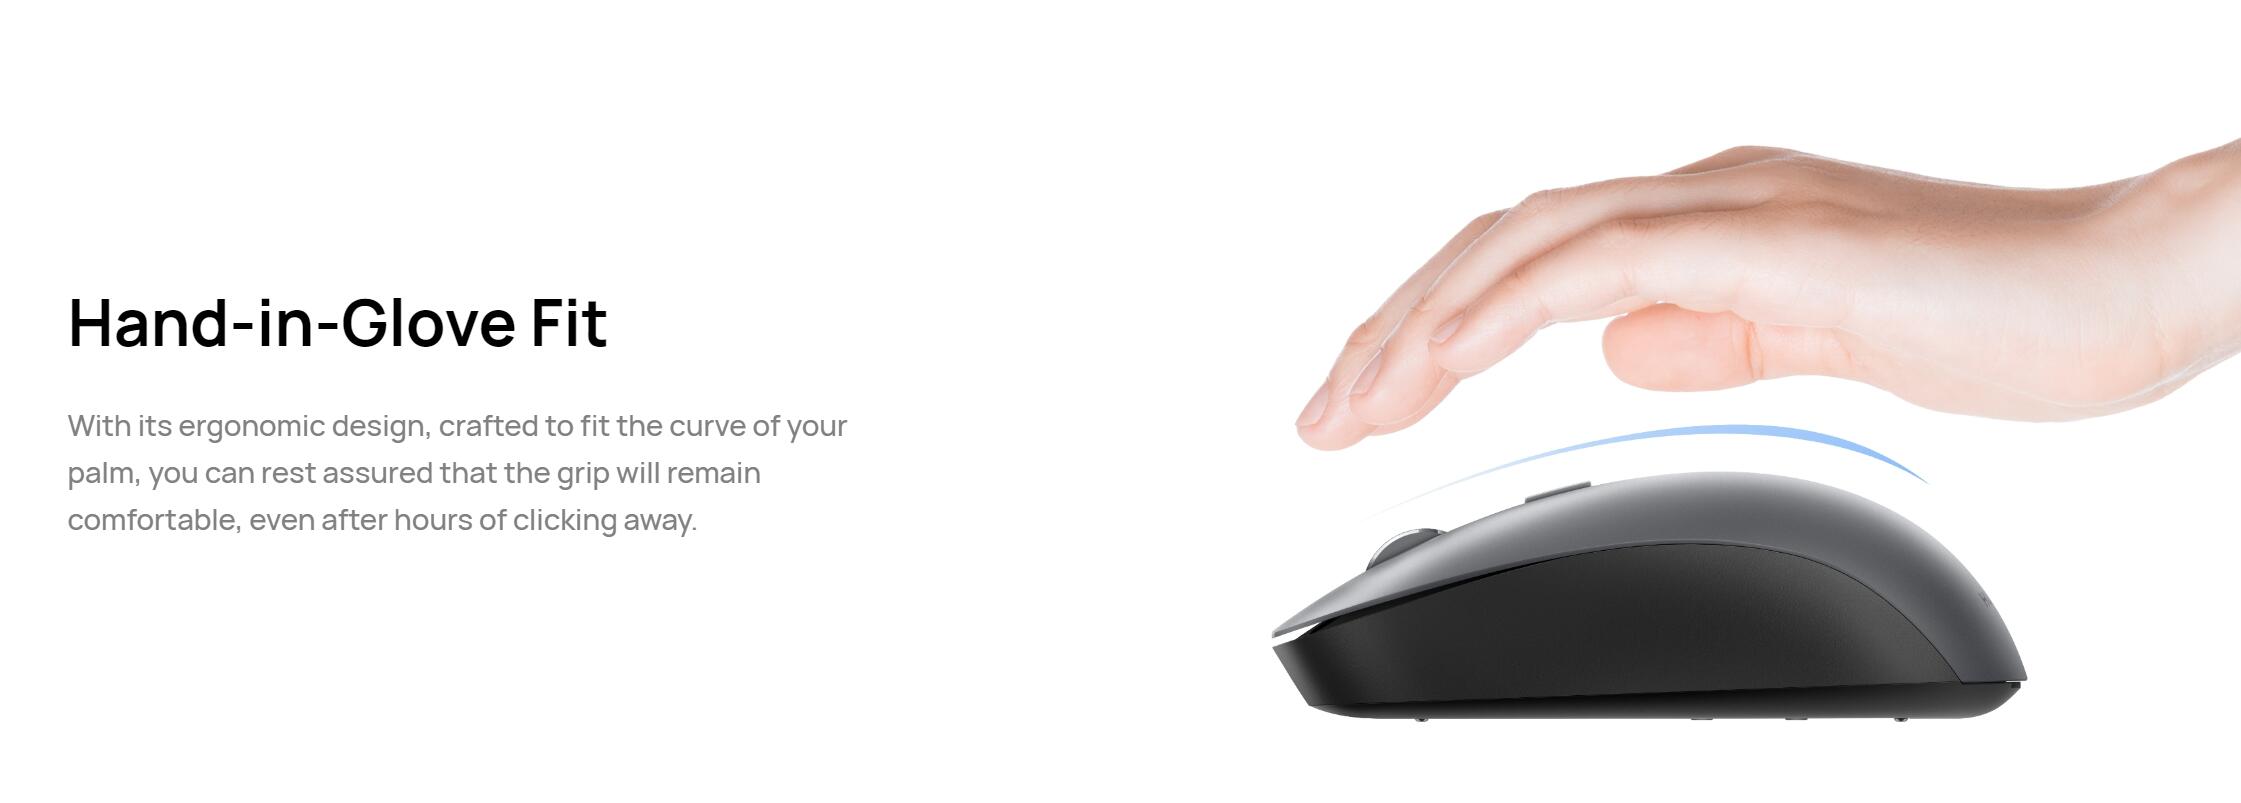 Huawei Wireless Mouse